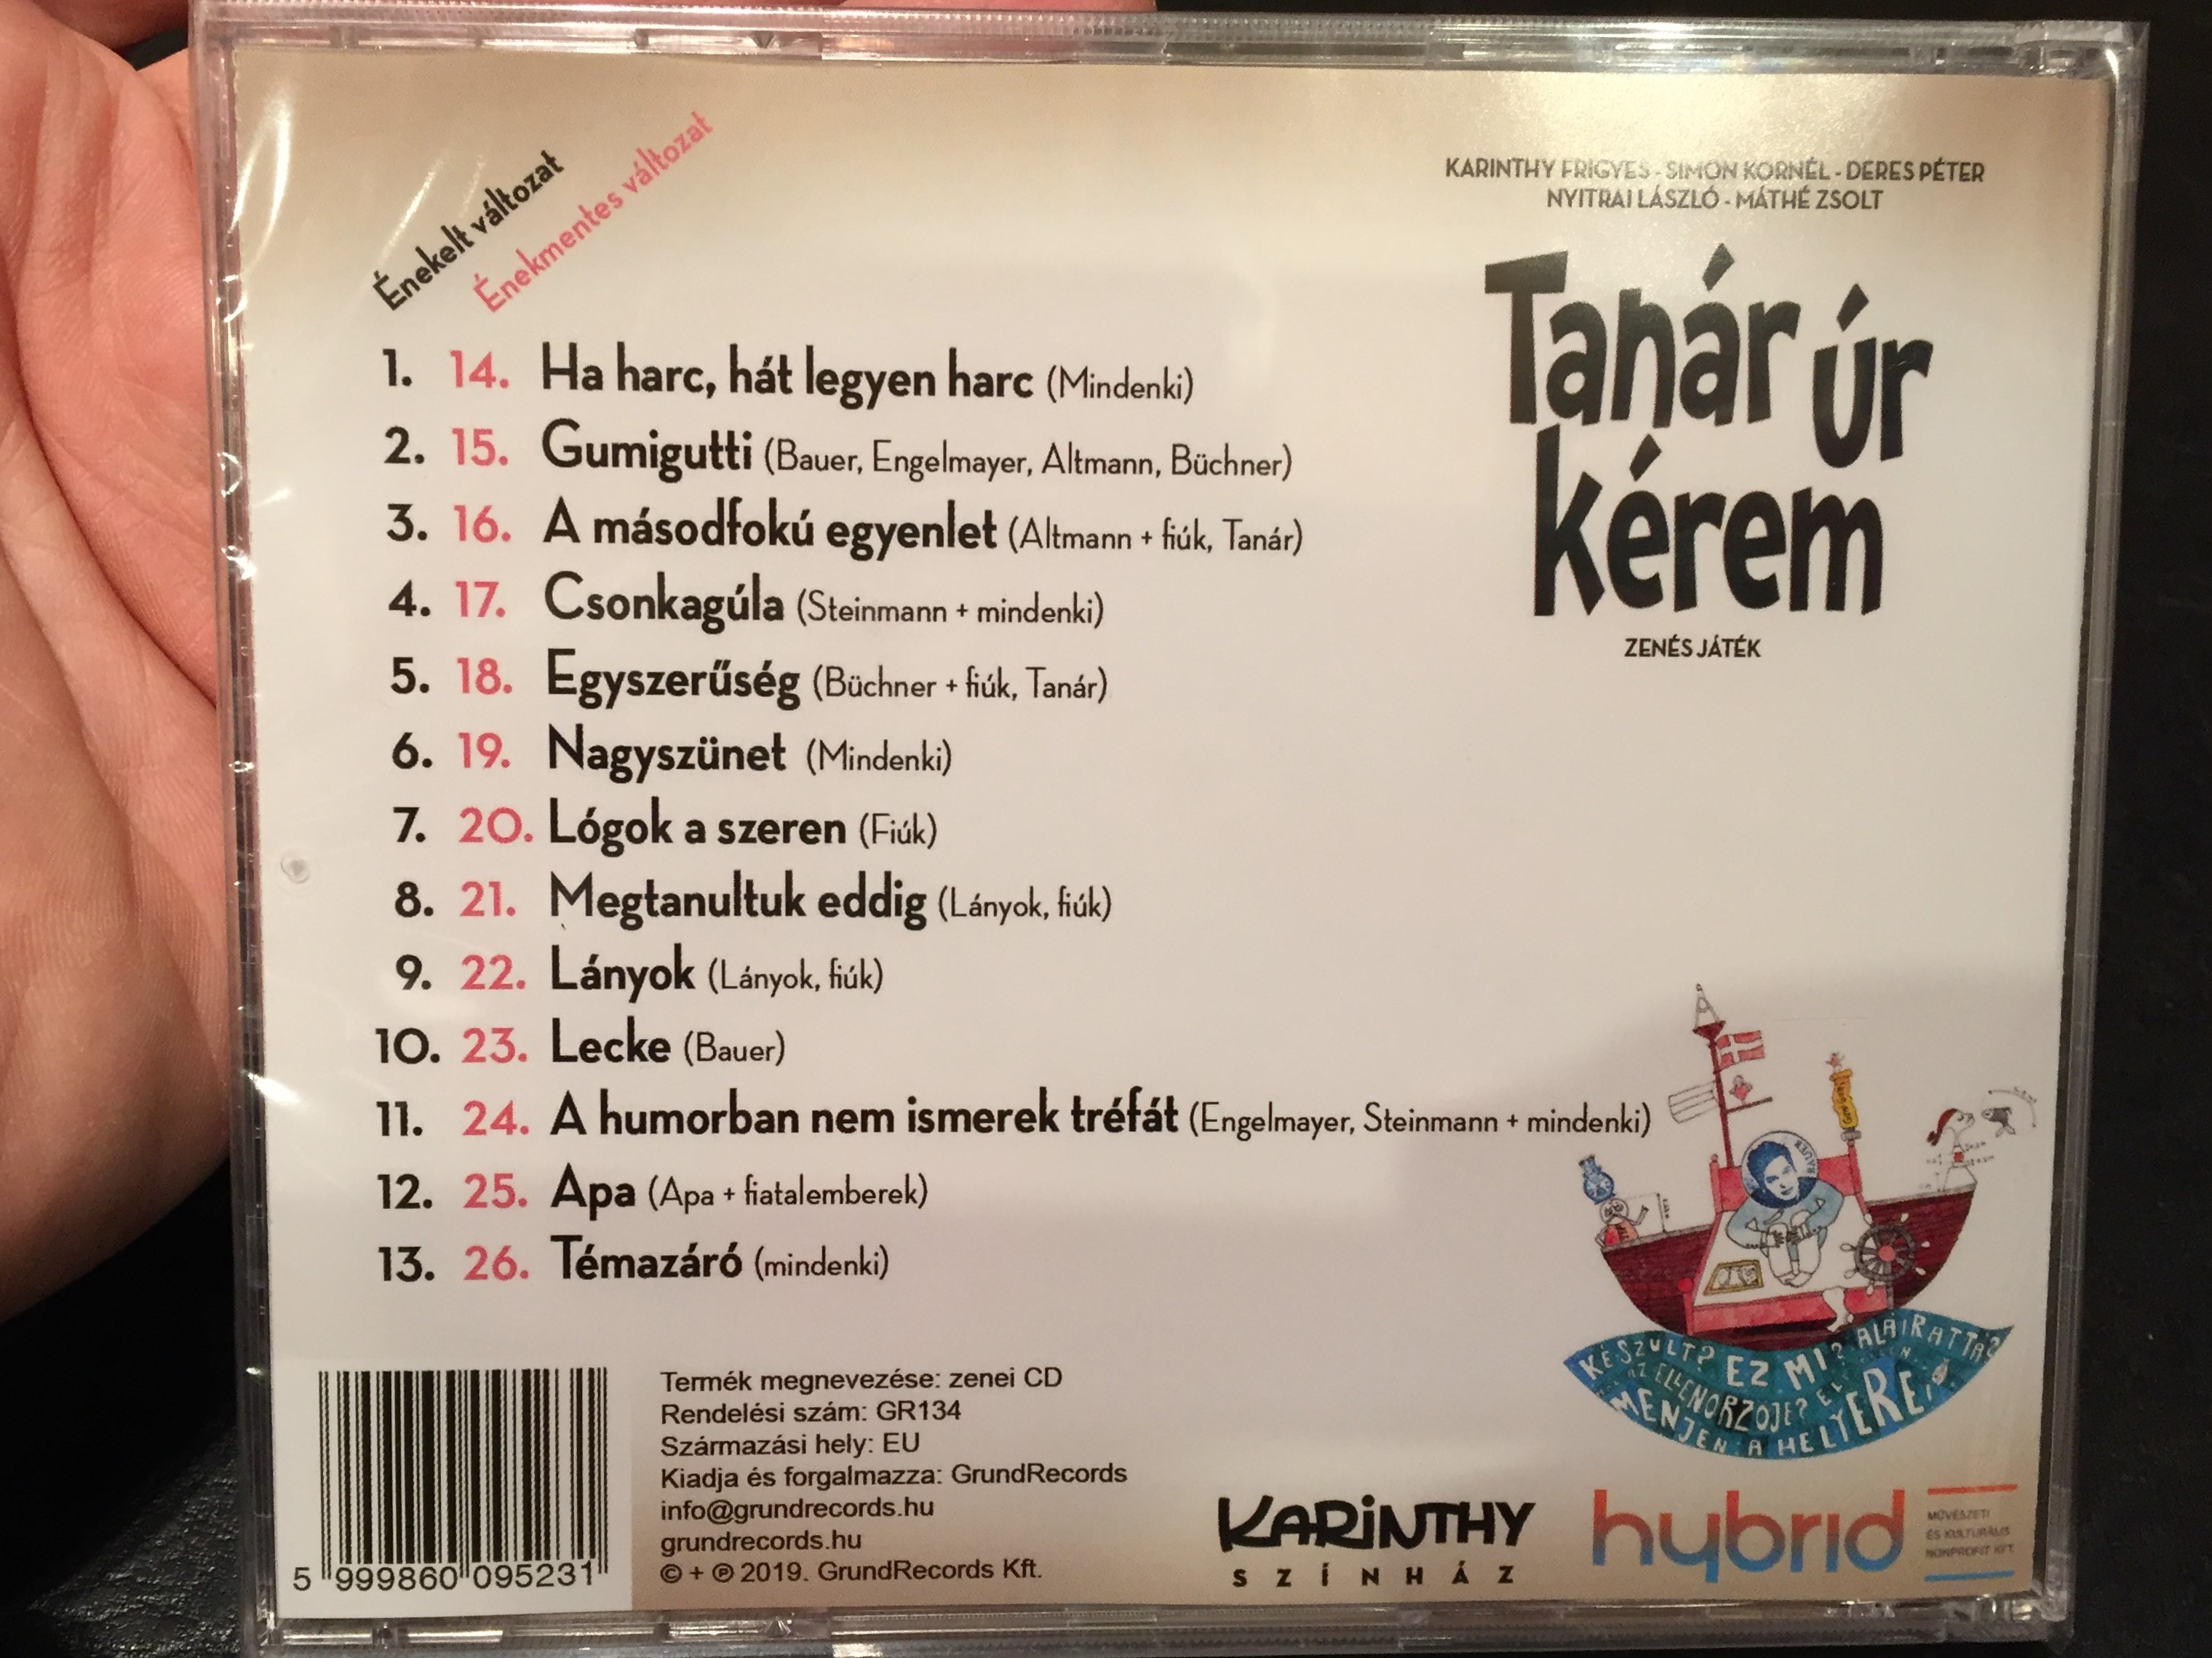 tan-r-r-k-rem-zenes-jatek-karinthy-frigyes-simon-kornel-deres-peter-nyitral-laszlo-mathe-zsolt-grund-records-kft.-audio-cd-2019-gr134-2-.jpg